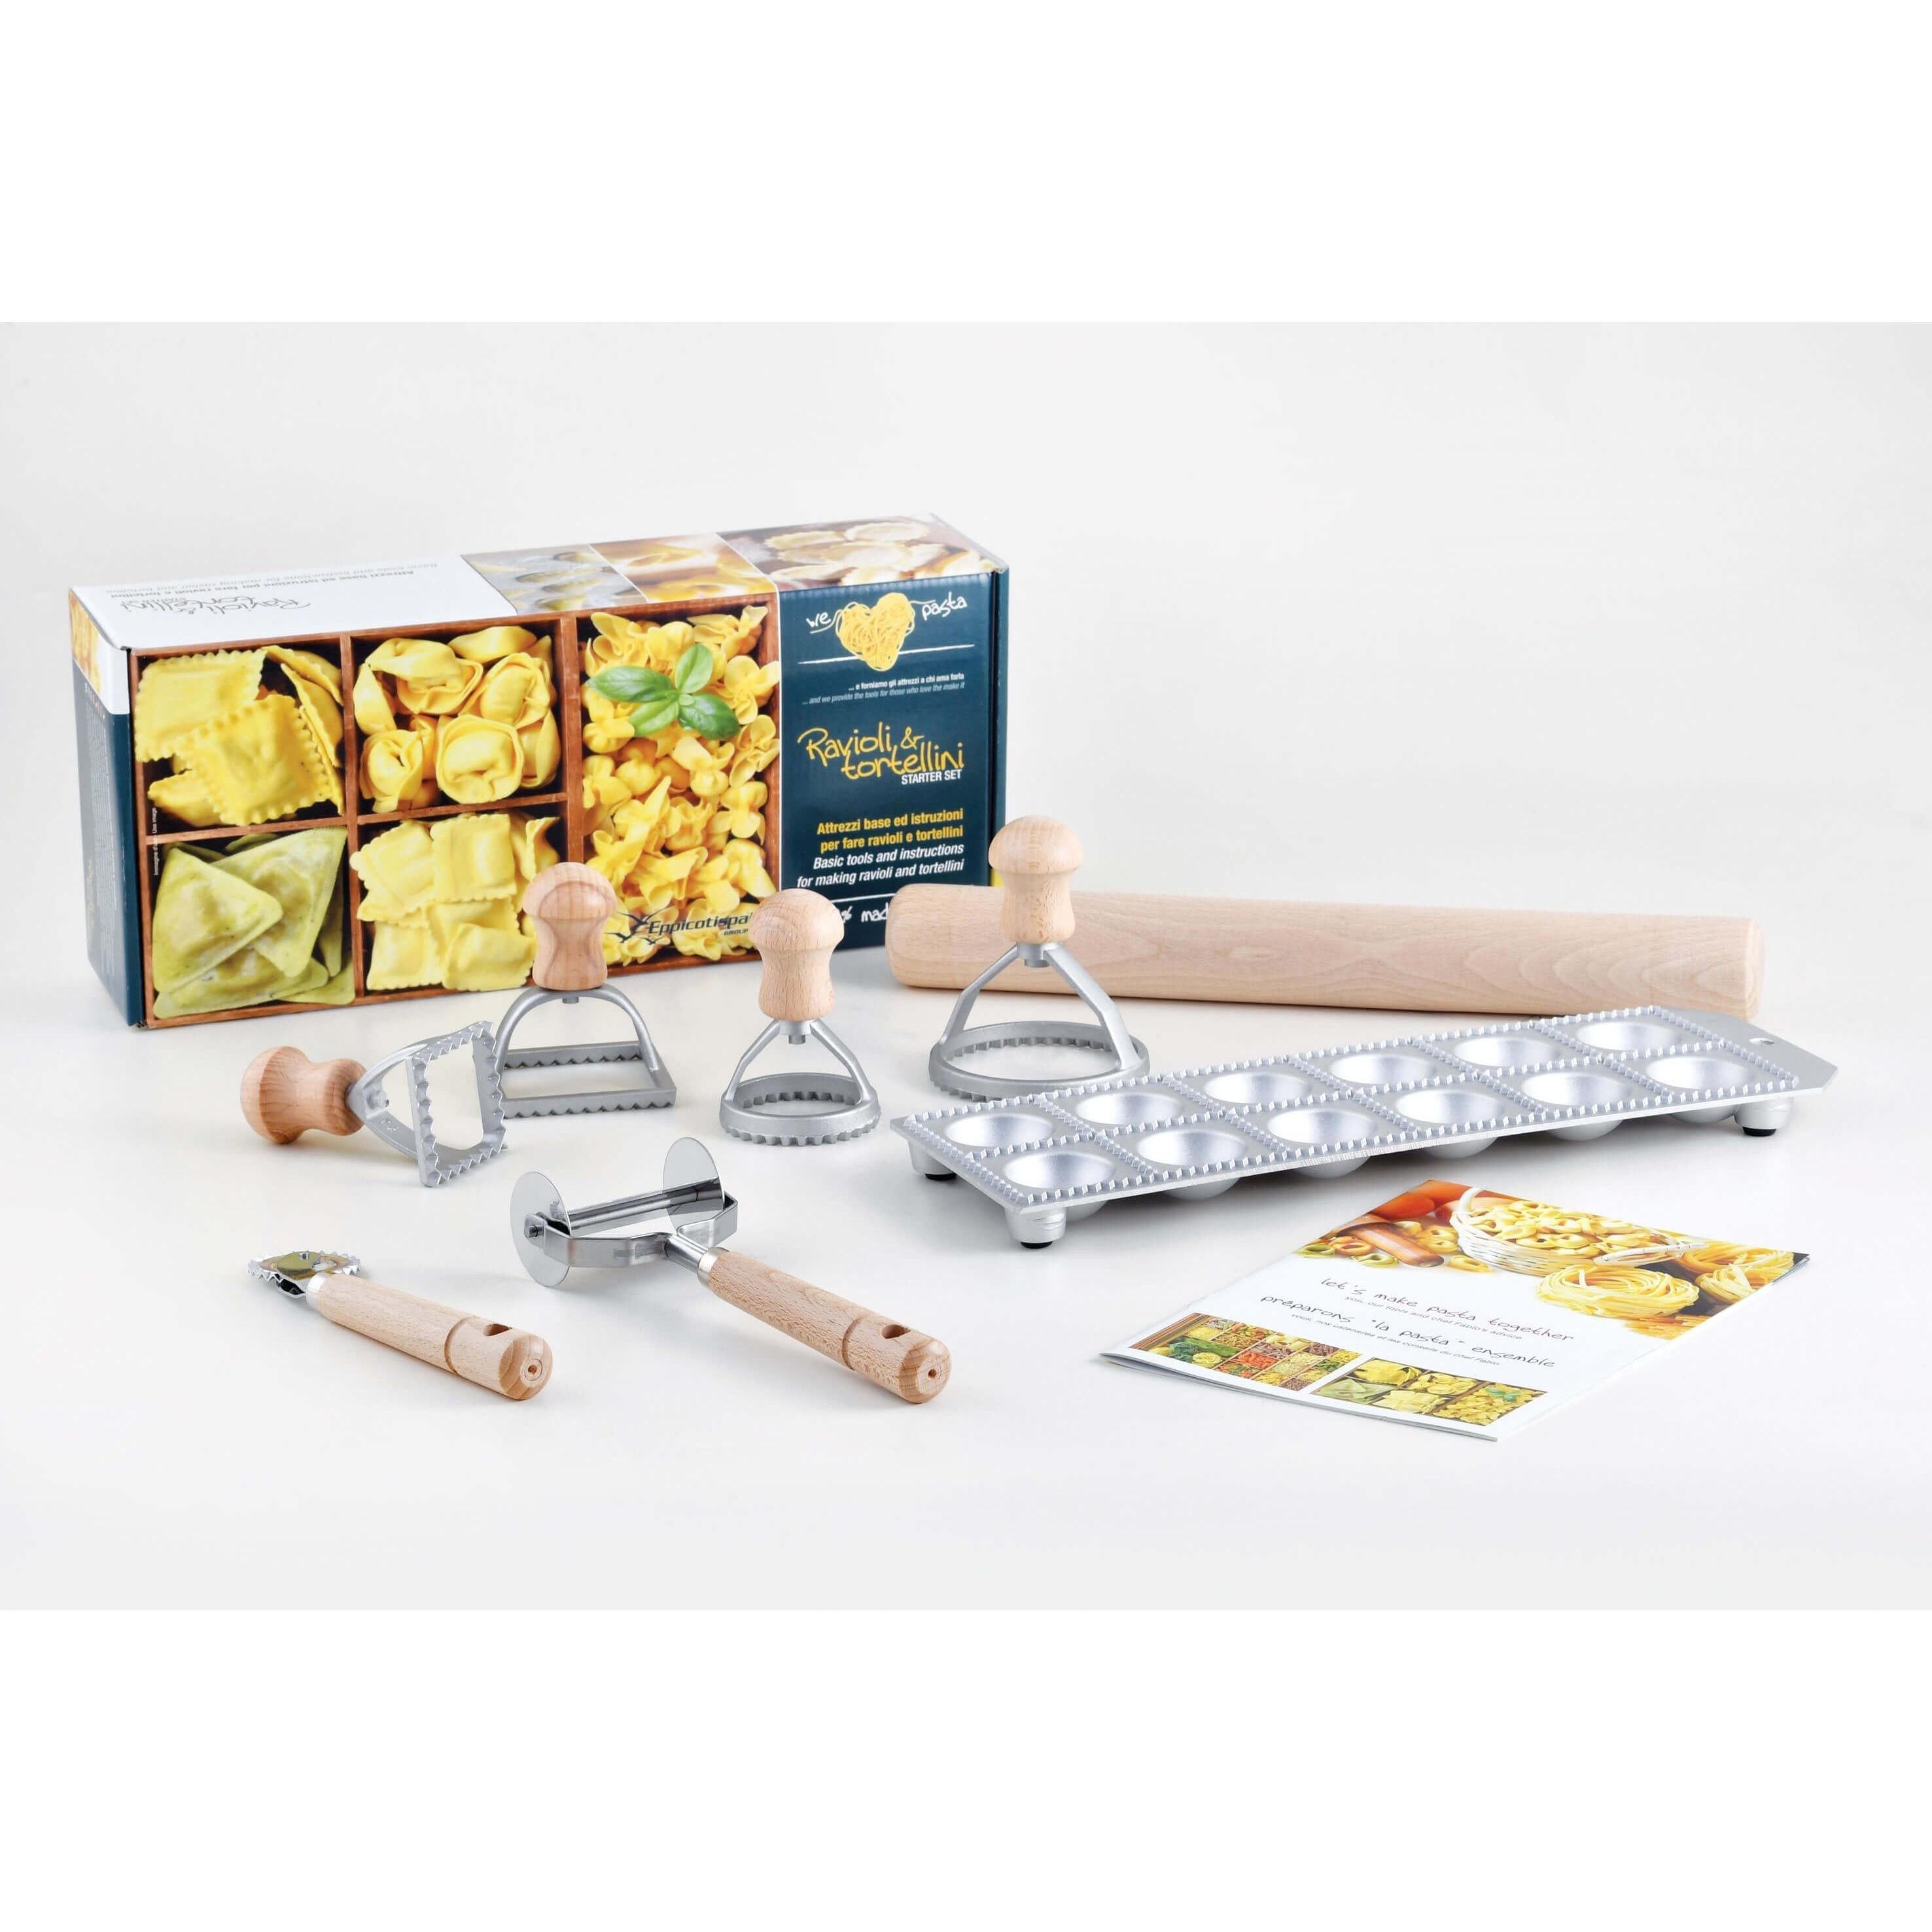 We Love Pasta - Ravioli & Tortellini Starter Set - Pasta Kitchen (tutto pasta)